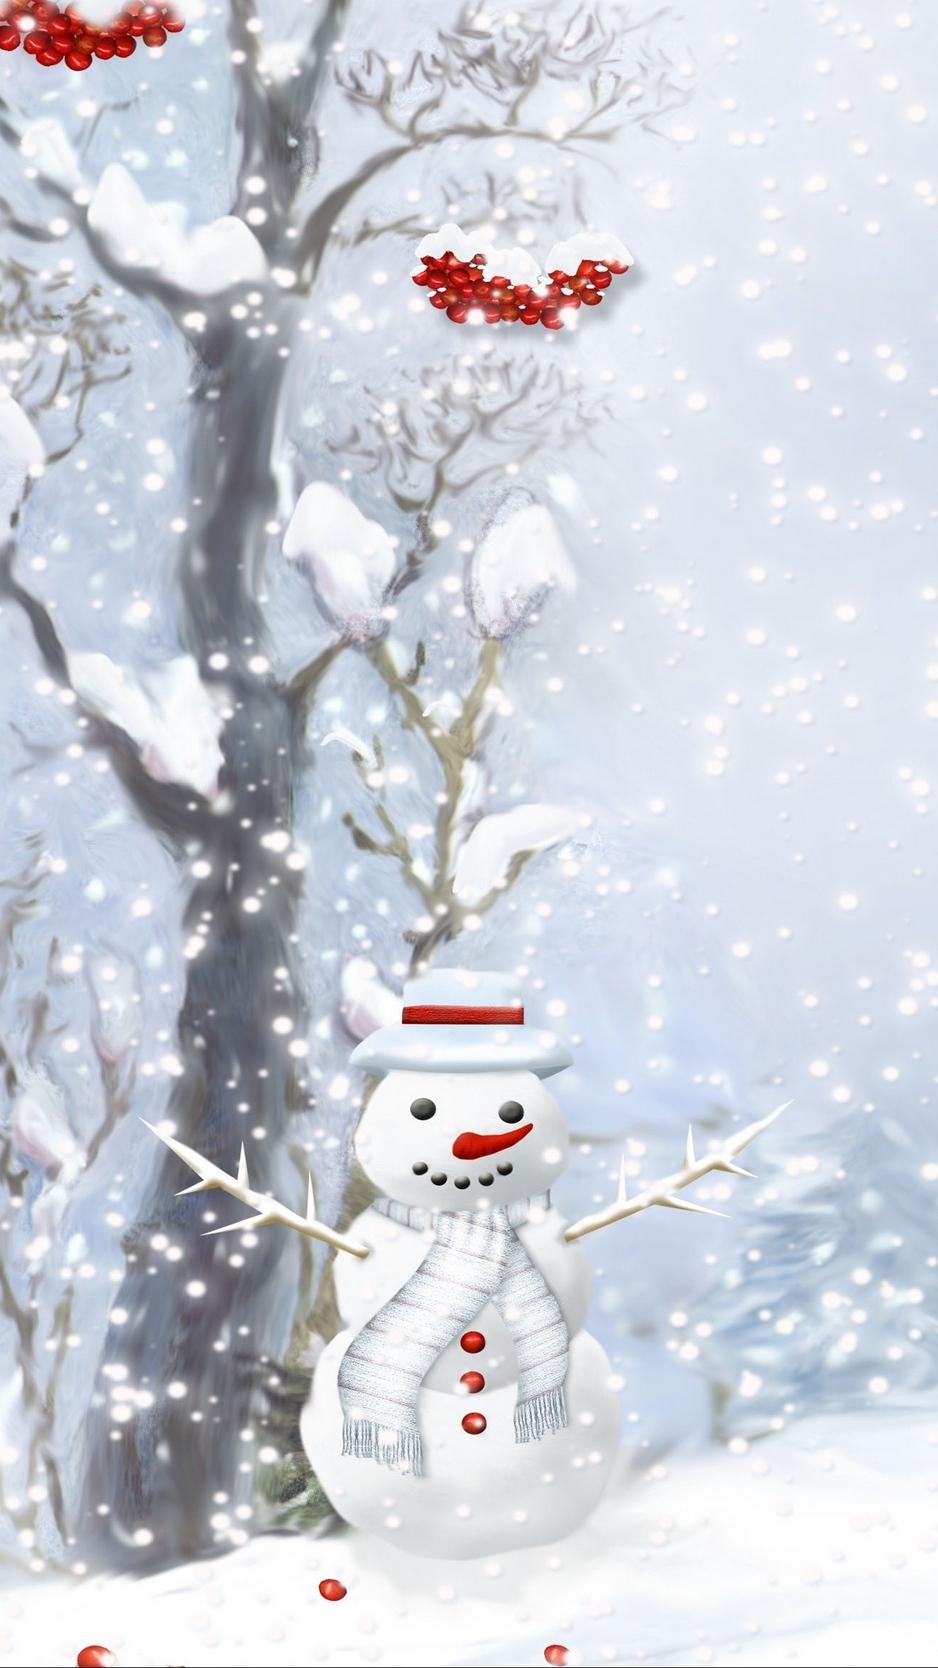 Download wallpaper 938x1668 snowman, scarf, buttons, wood